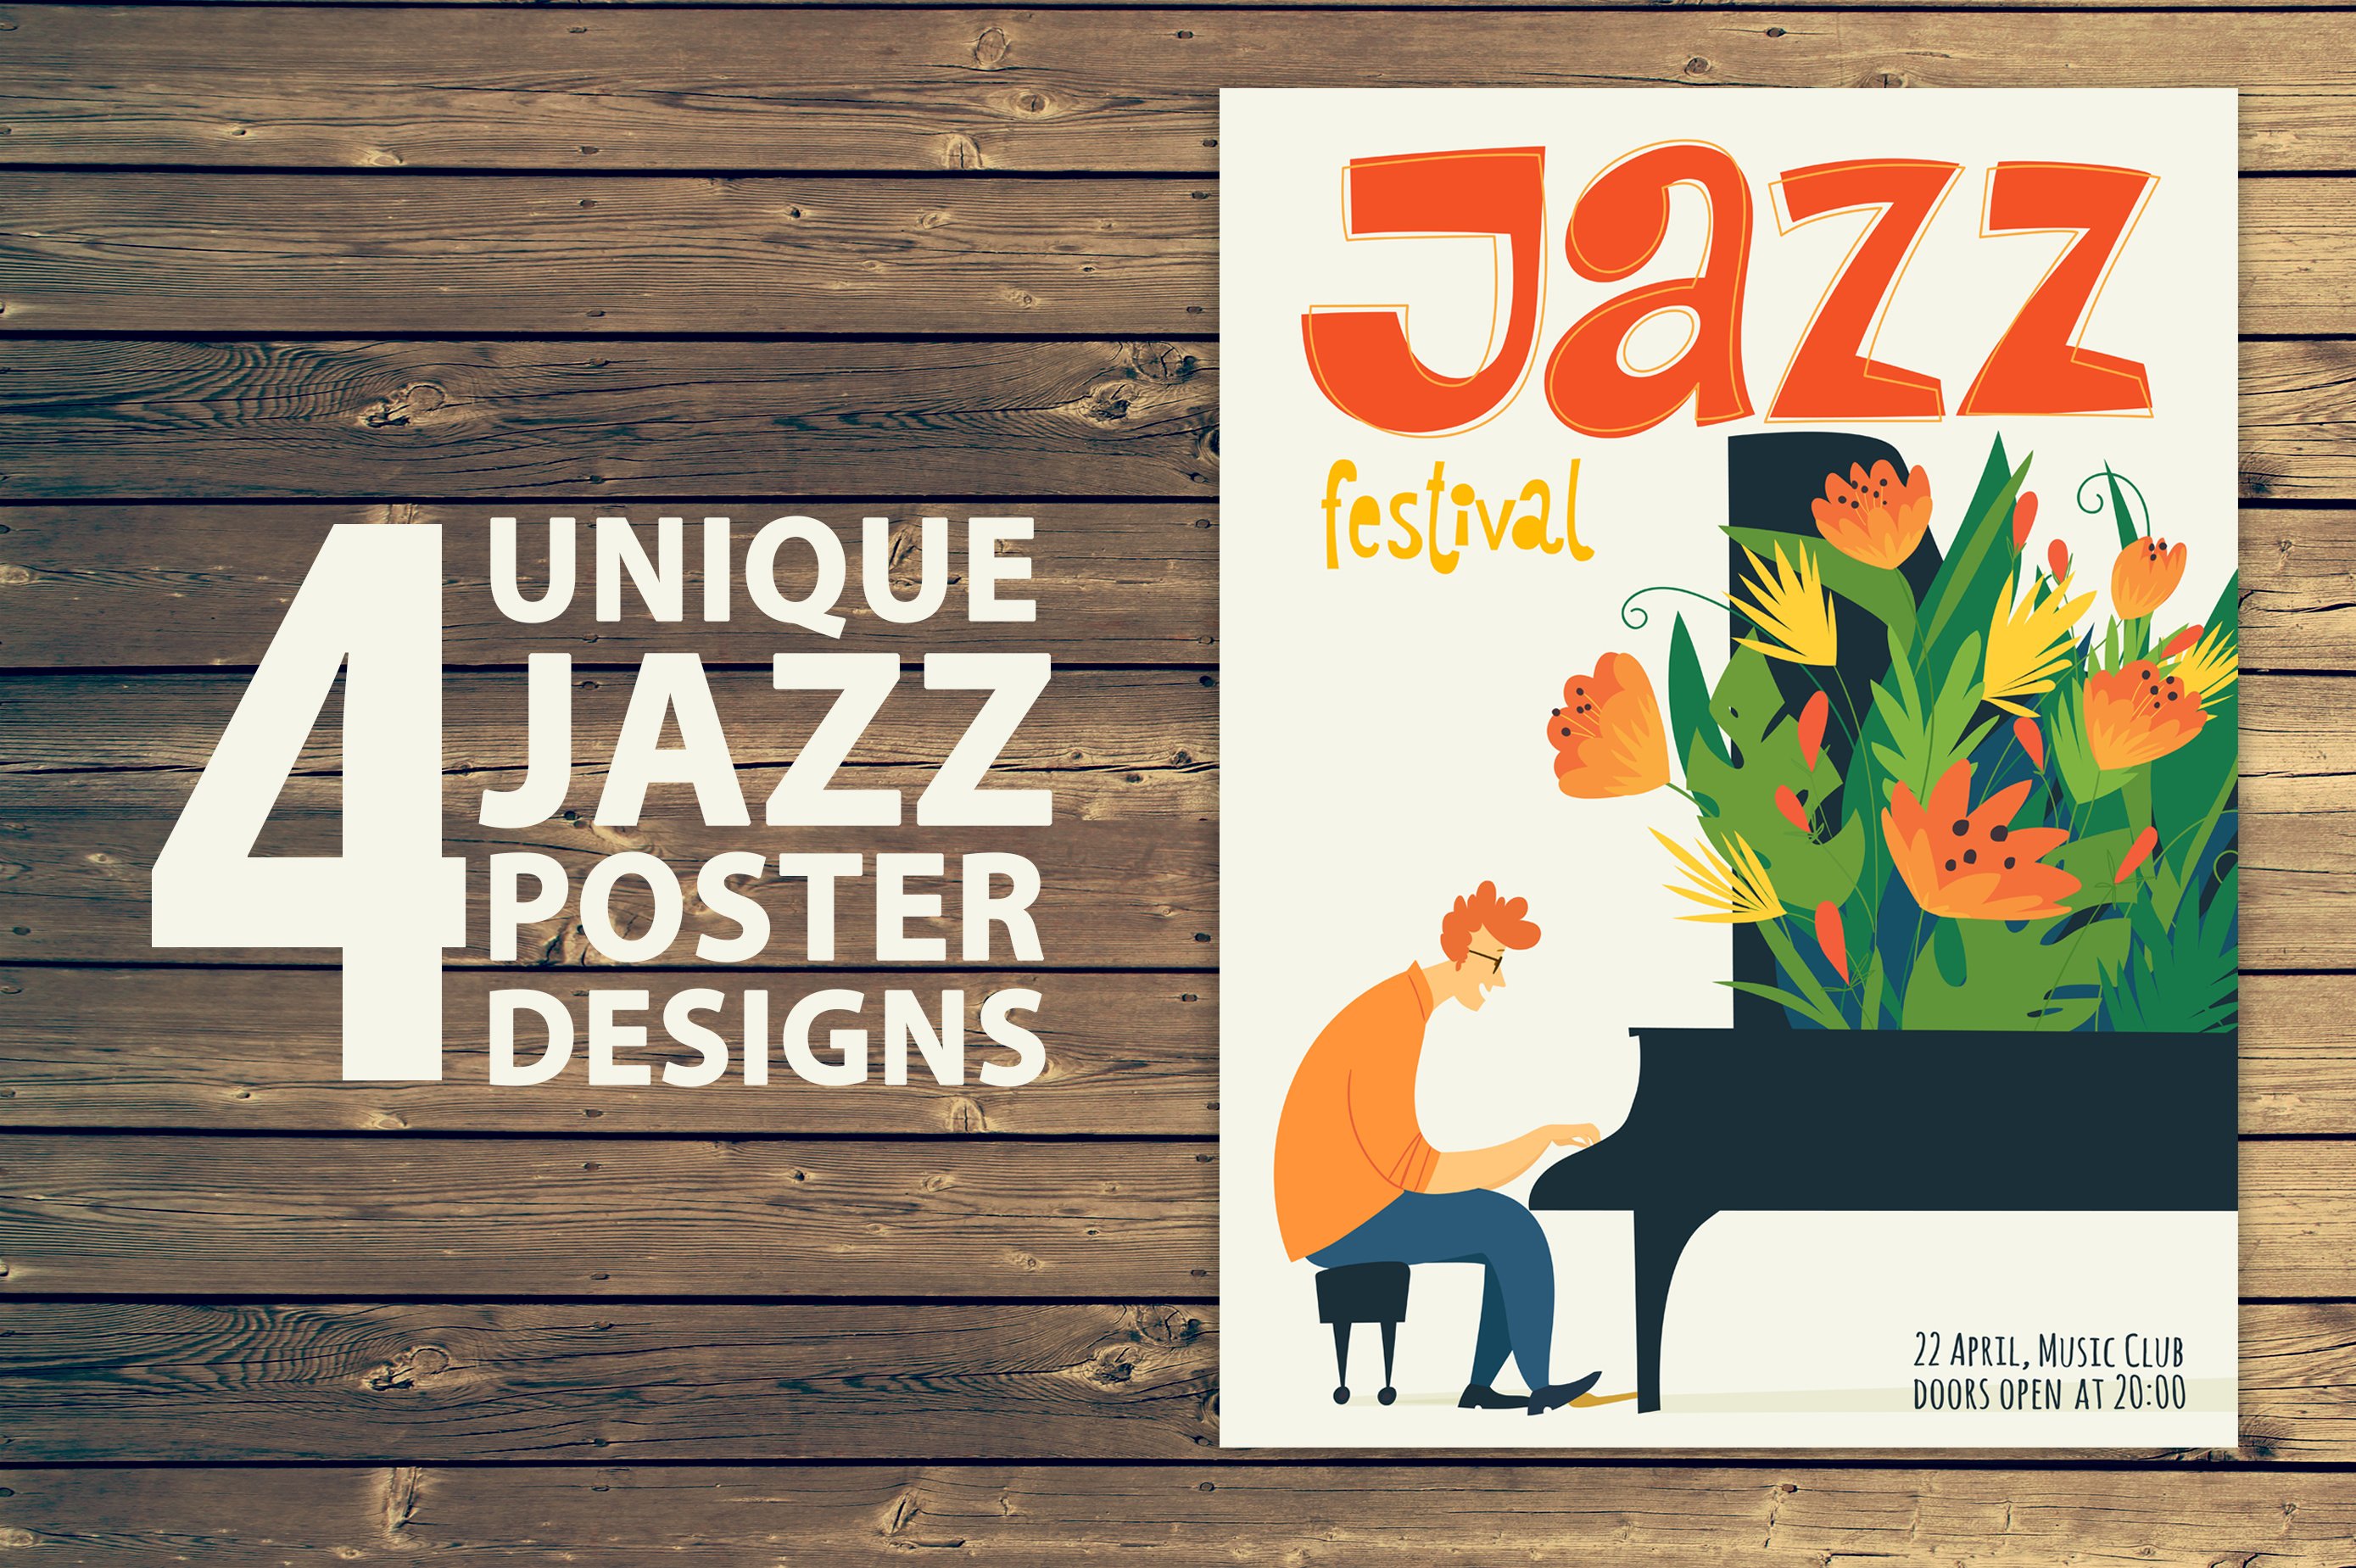 4 Unique Jazz Poster Designs cover image.